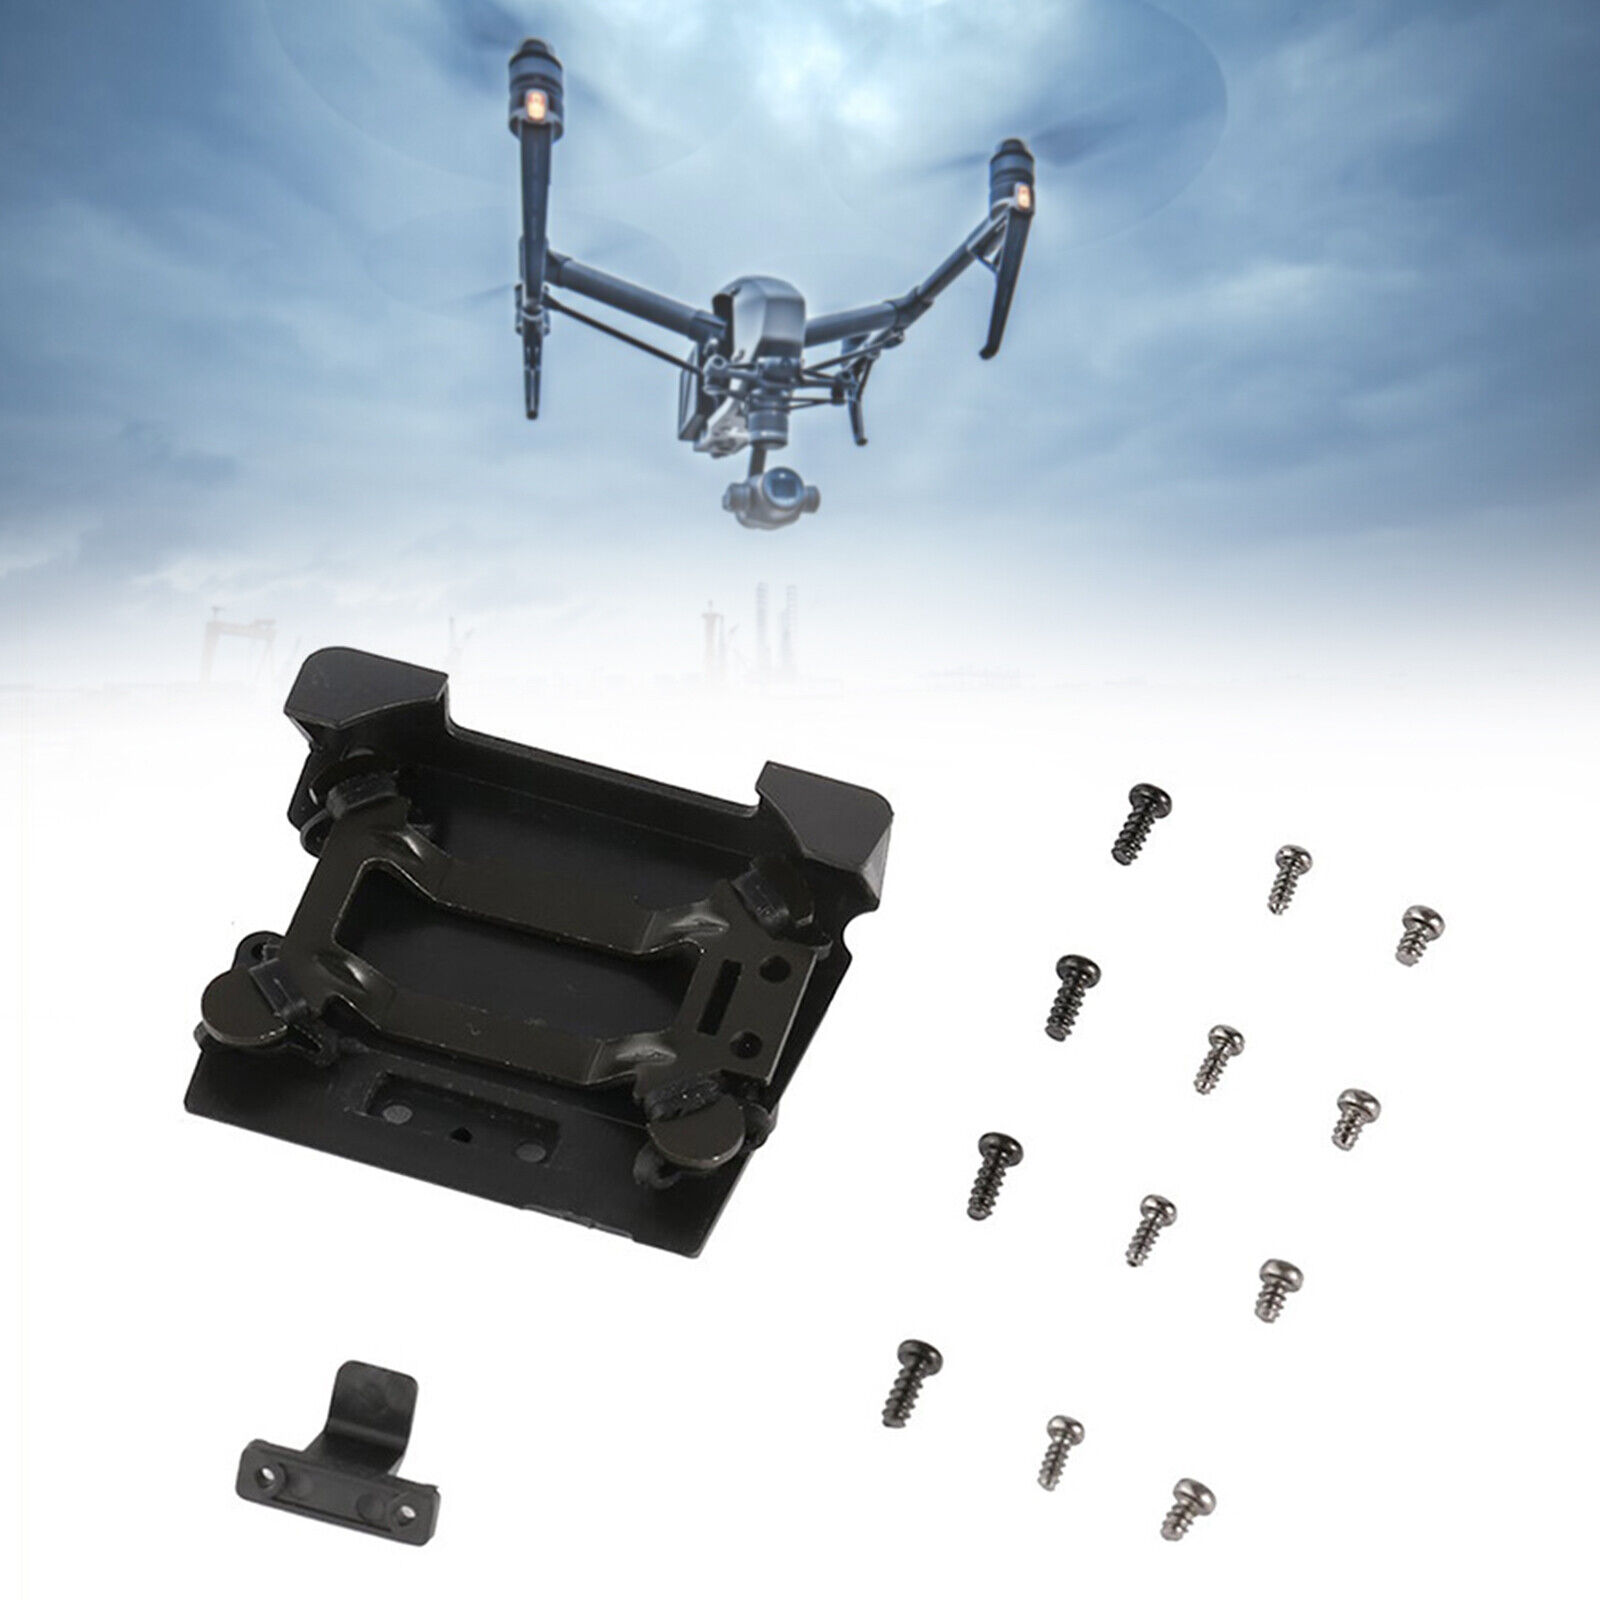 Gimbal Vibration Absorbing Board Mount For DJI Mavic Pro RC Camera Drone Part UK